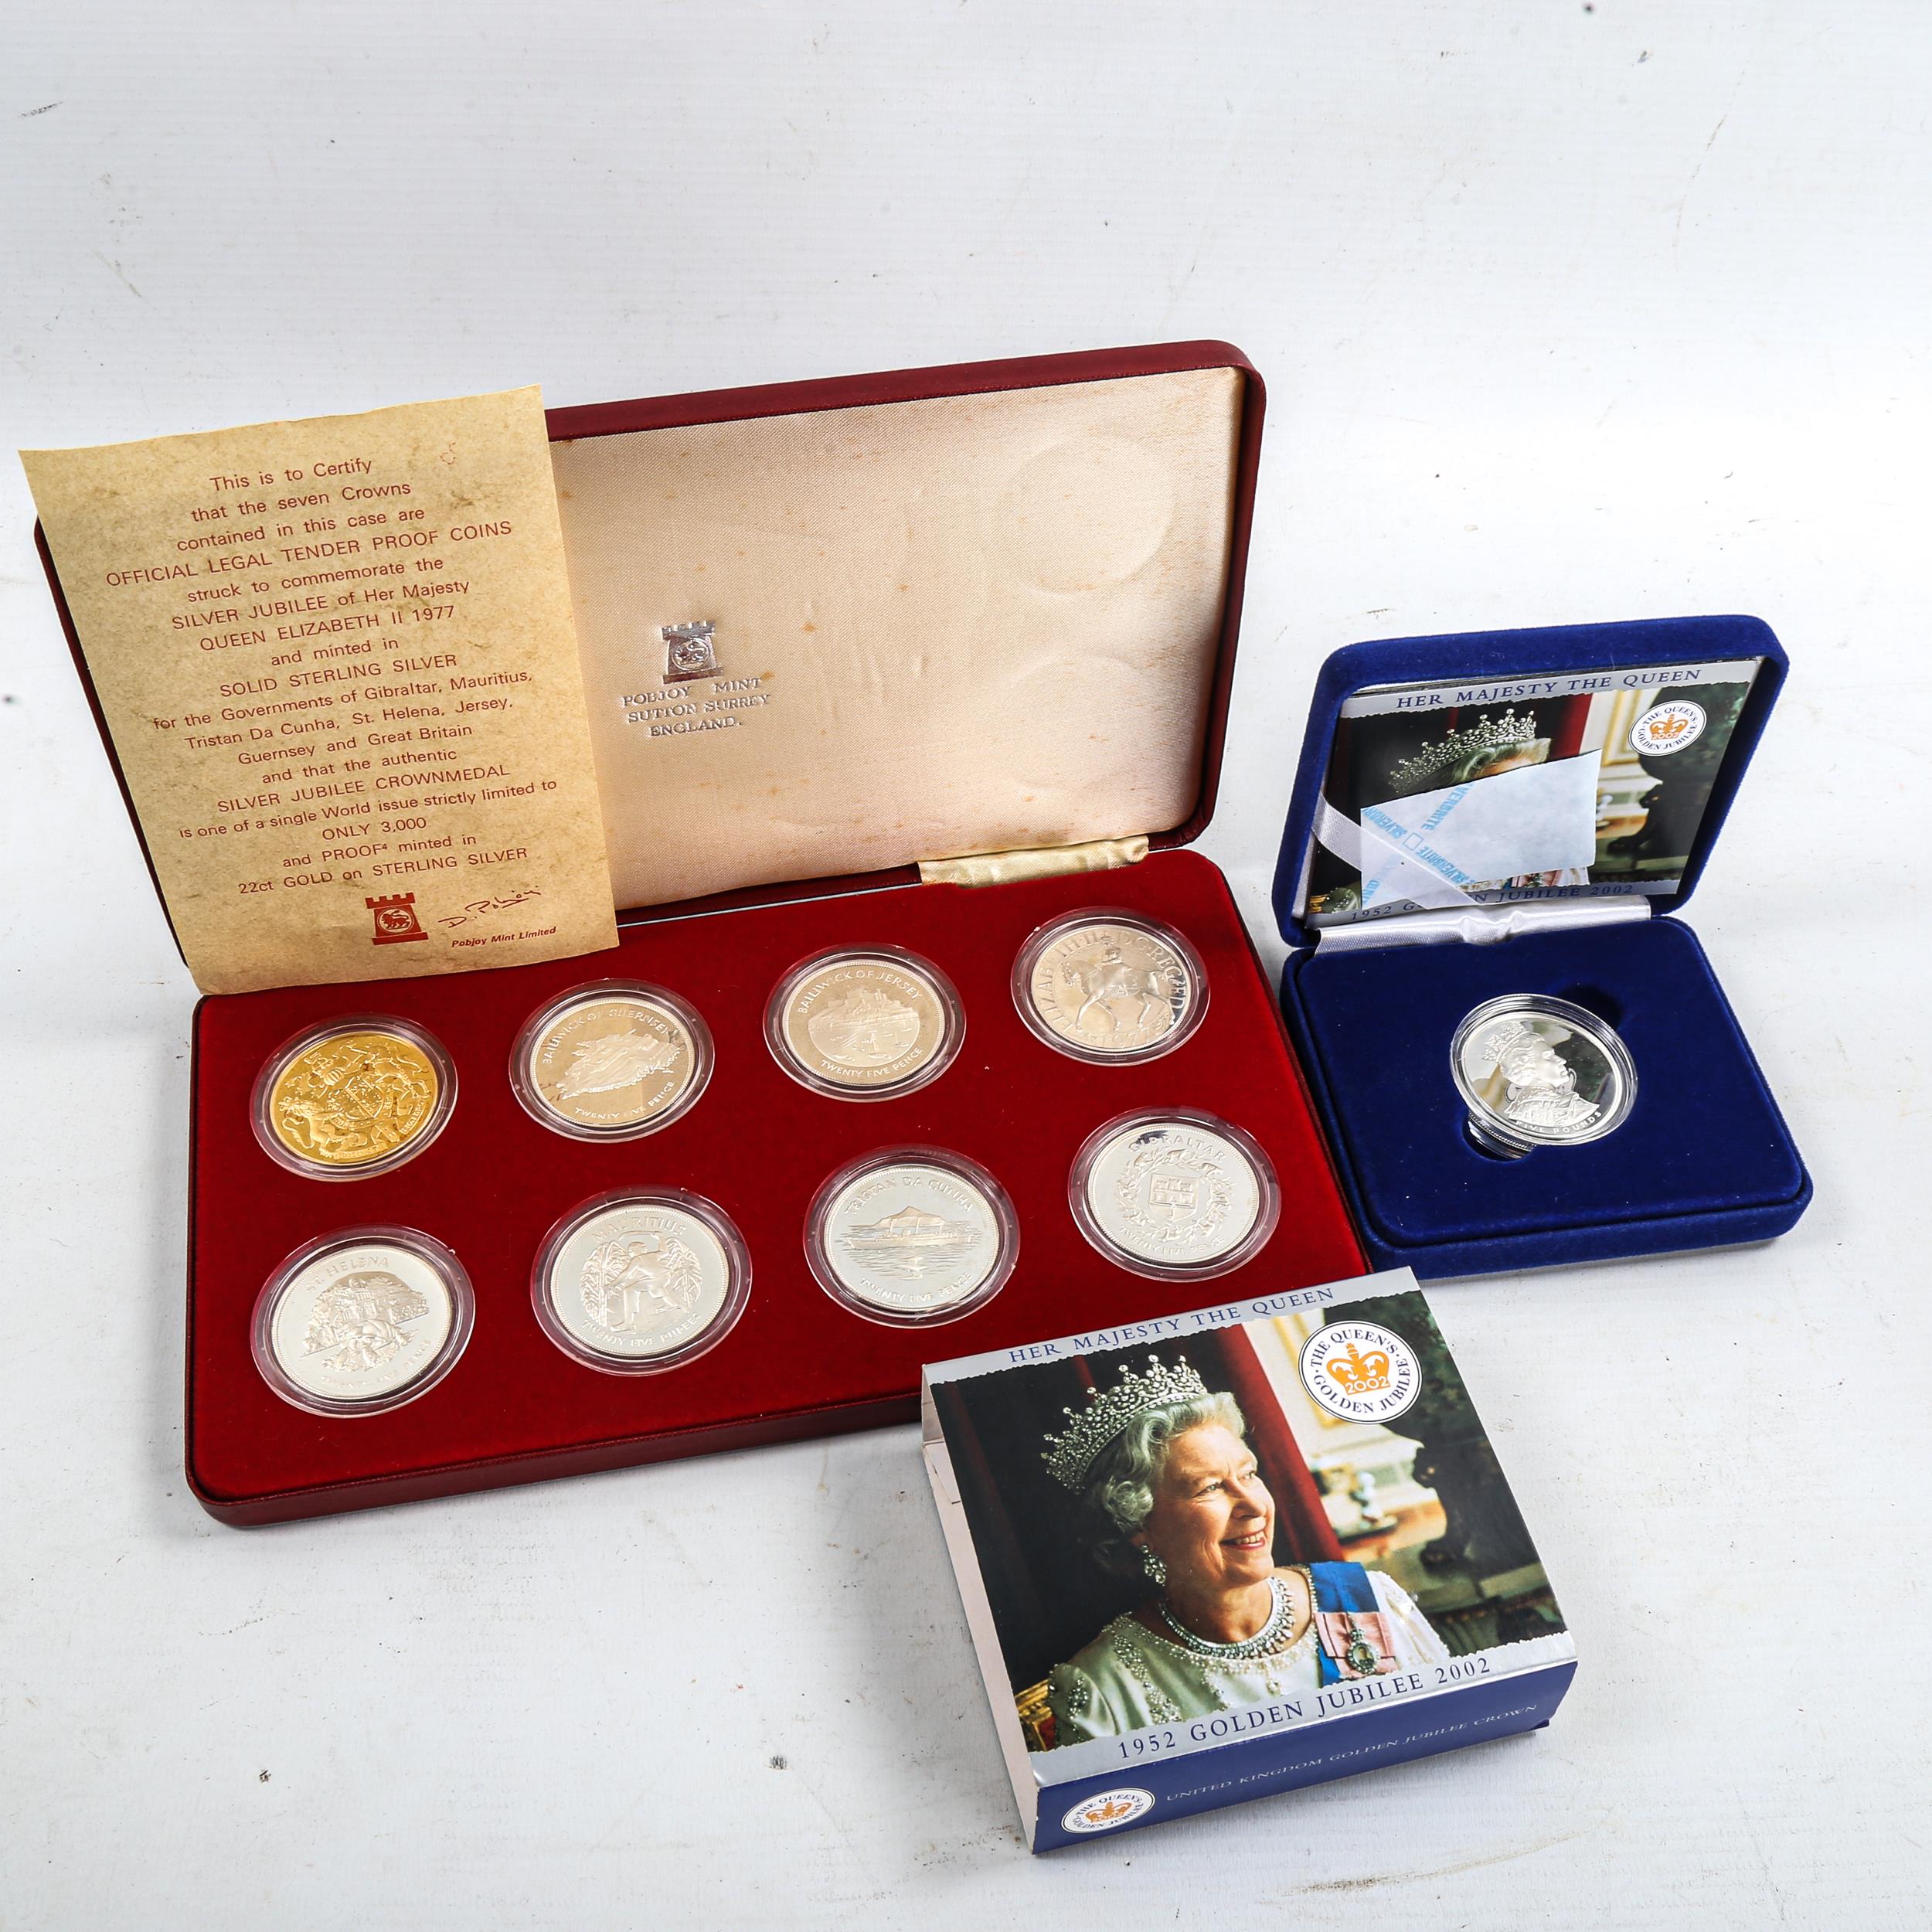 A set of 7 Queen Elizabeth II silver Jubilee sterling silver proof Crown coins, by Pobjoy Mint, - Image 2 of 3